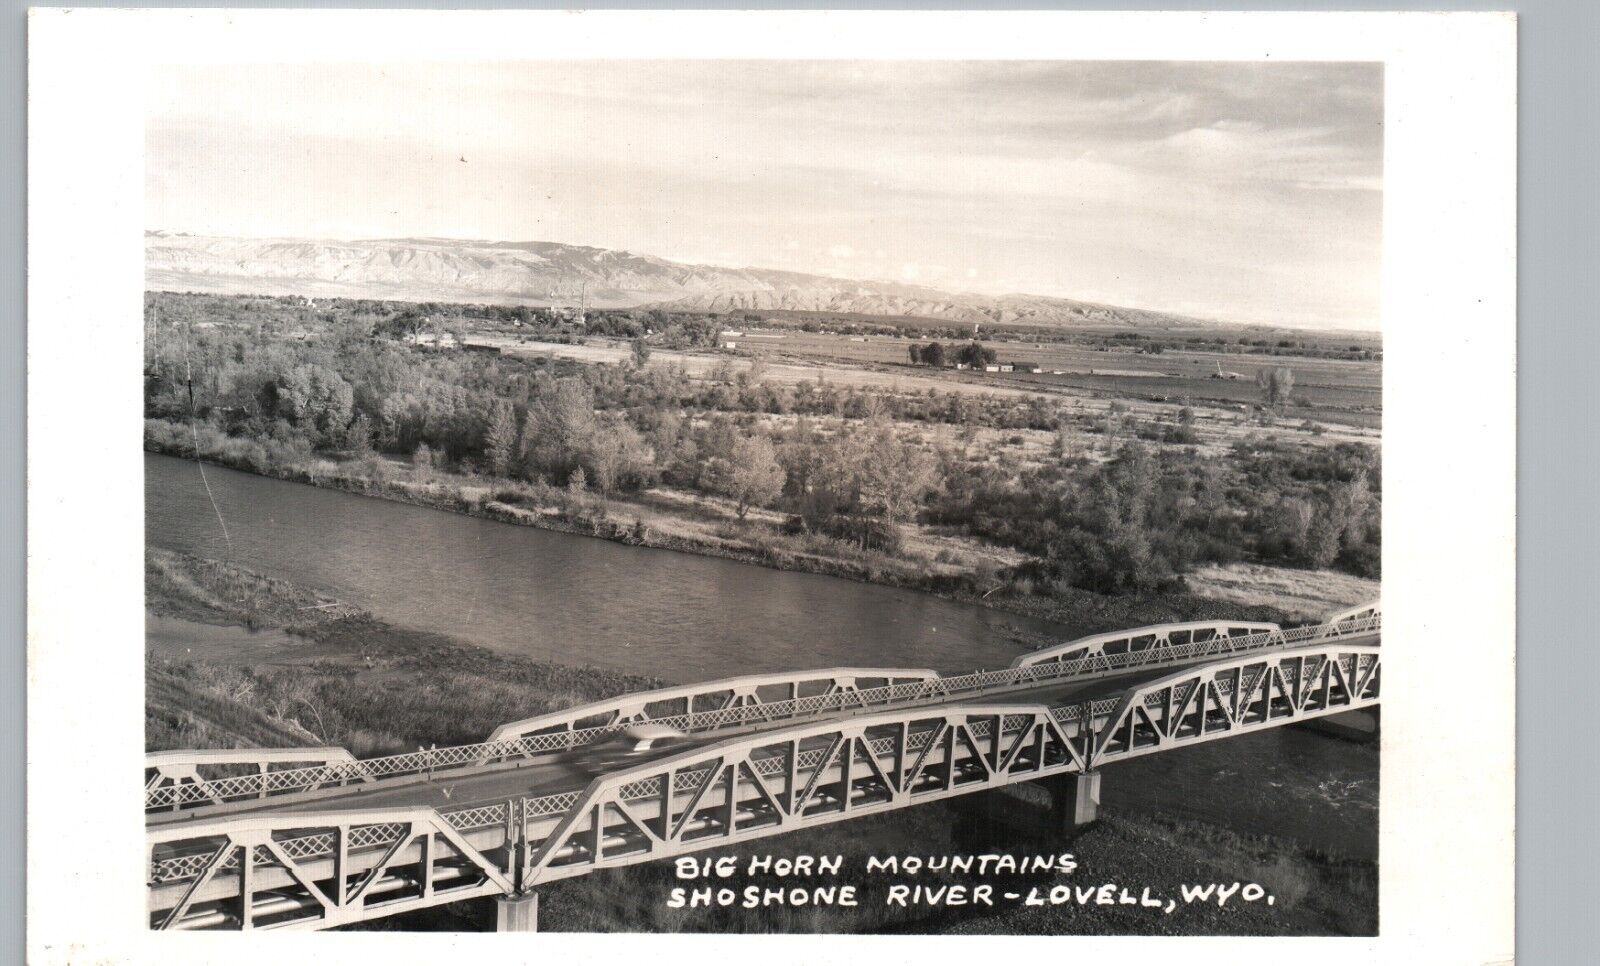 SHOSHONE RIVER BRIDGE lovell wy real photo postcard rppc wyoming bighorn mtns